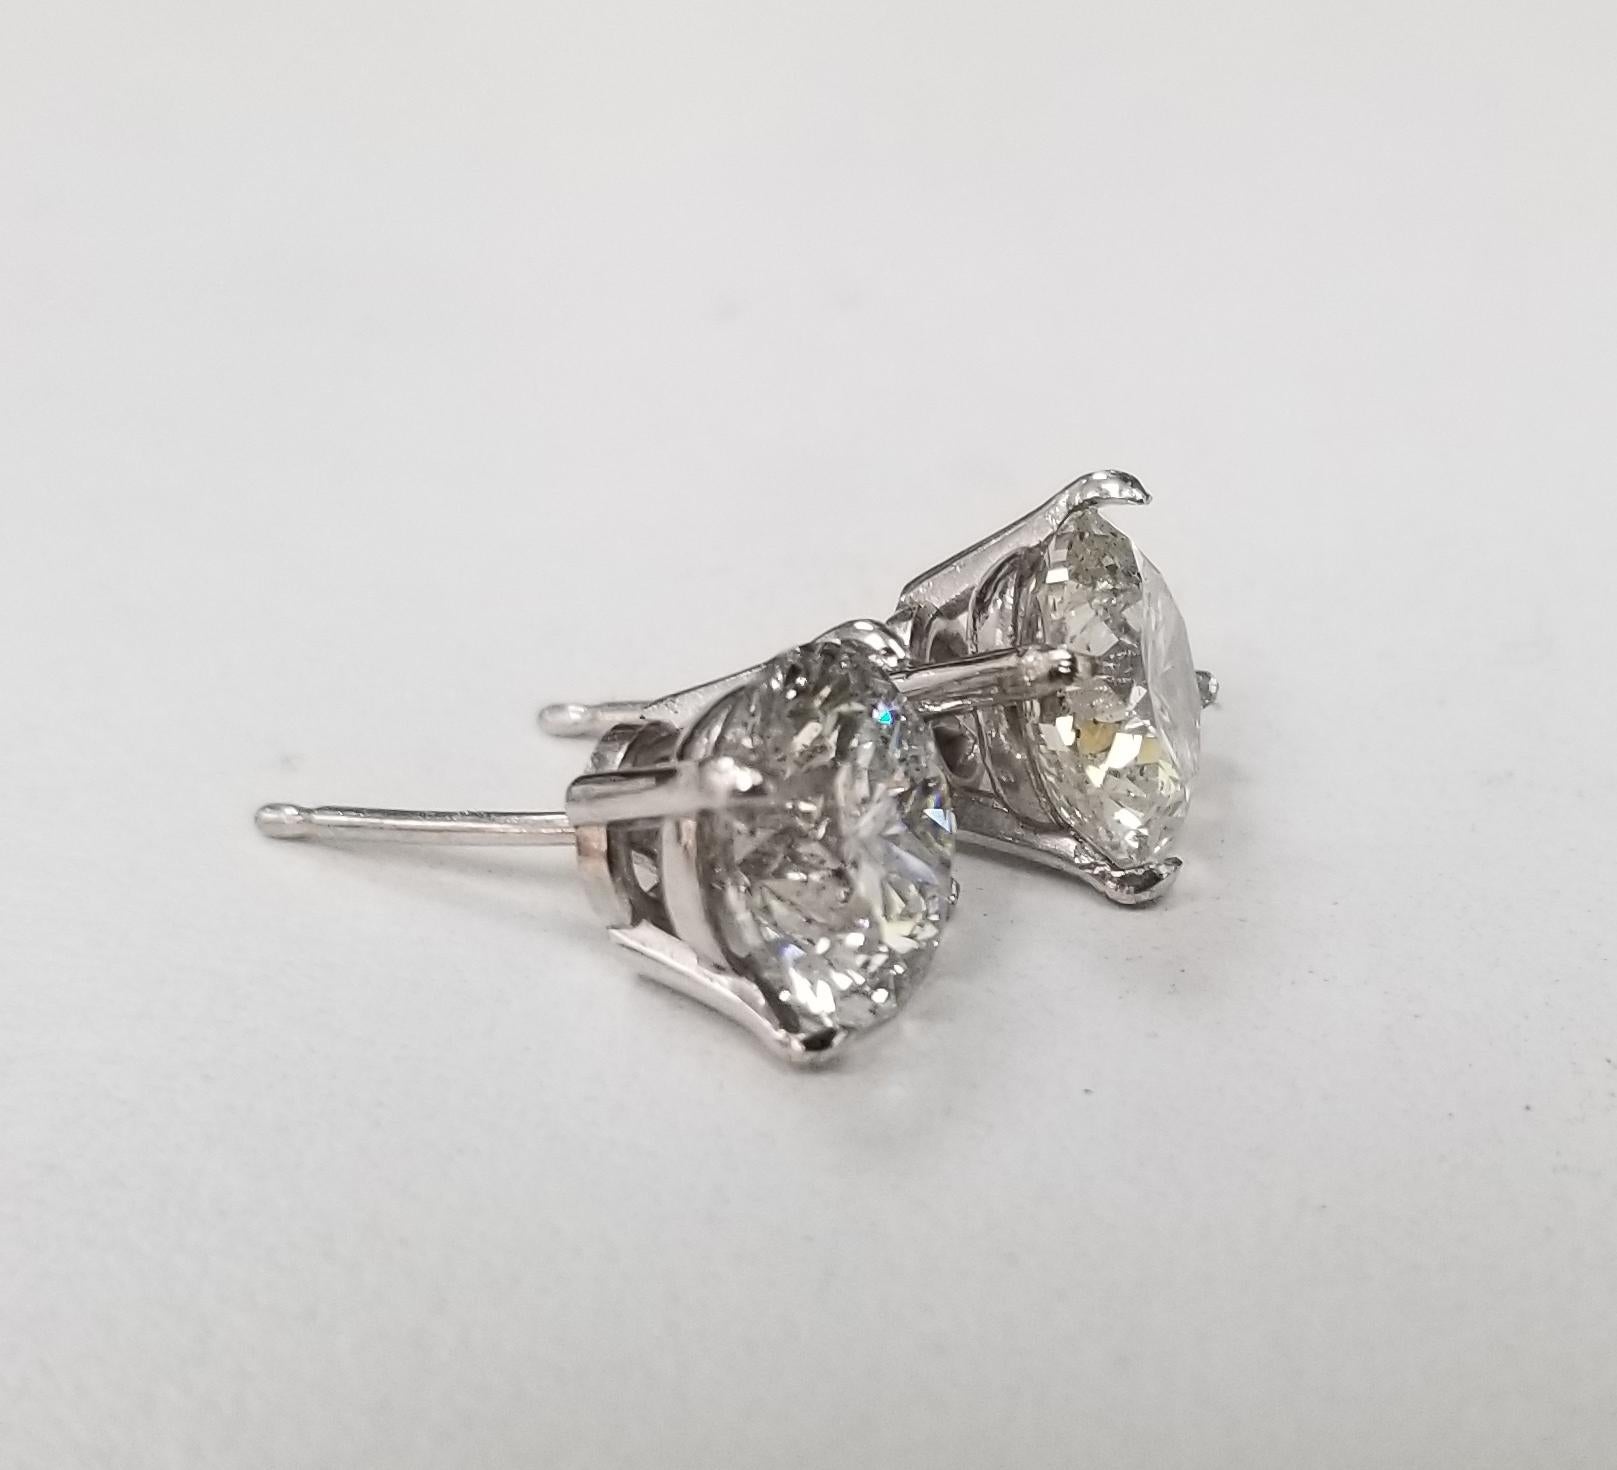 14k white gold 4.01ct.s diamonds stud earrings, containing 2 brilliant cut diamonds; color 